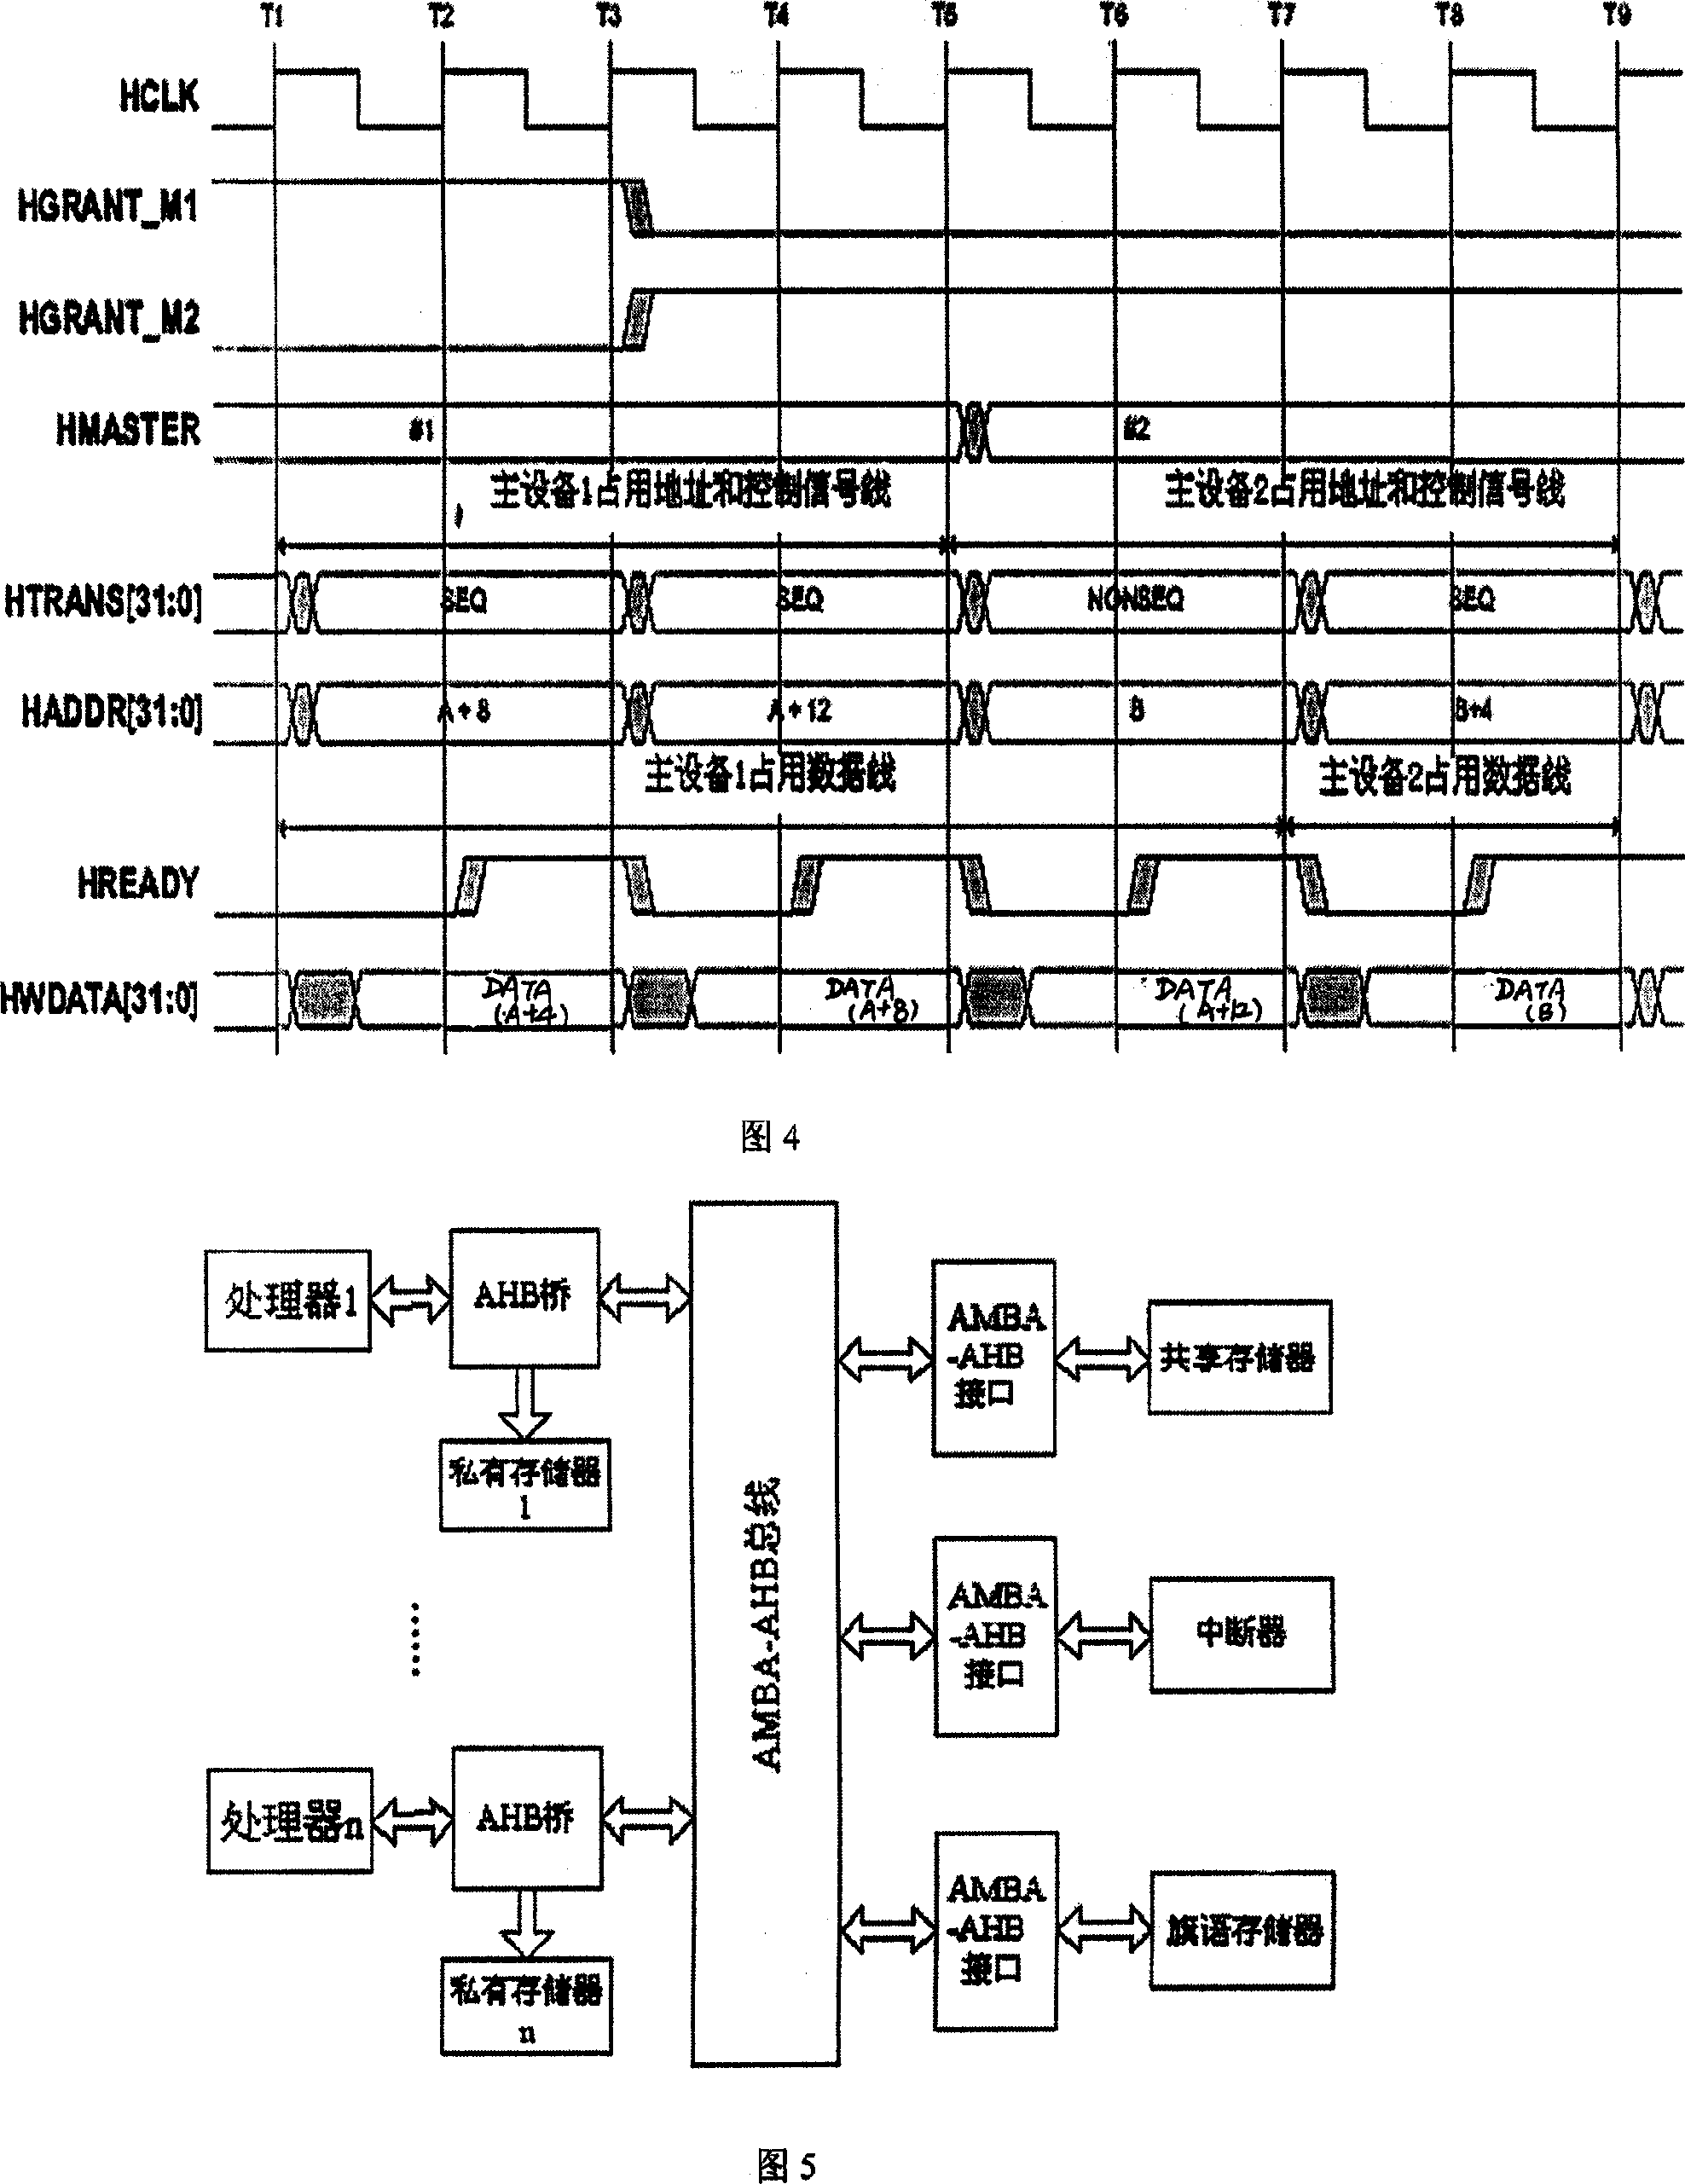 Dynamic self-adaptive bus arbiter based on microprocessor-on-chip